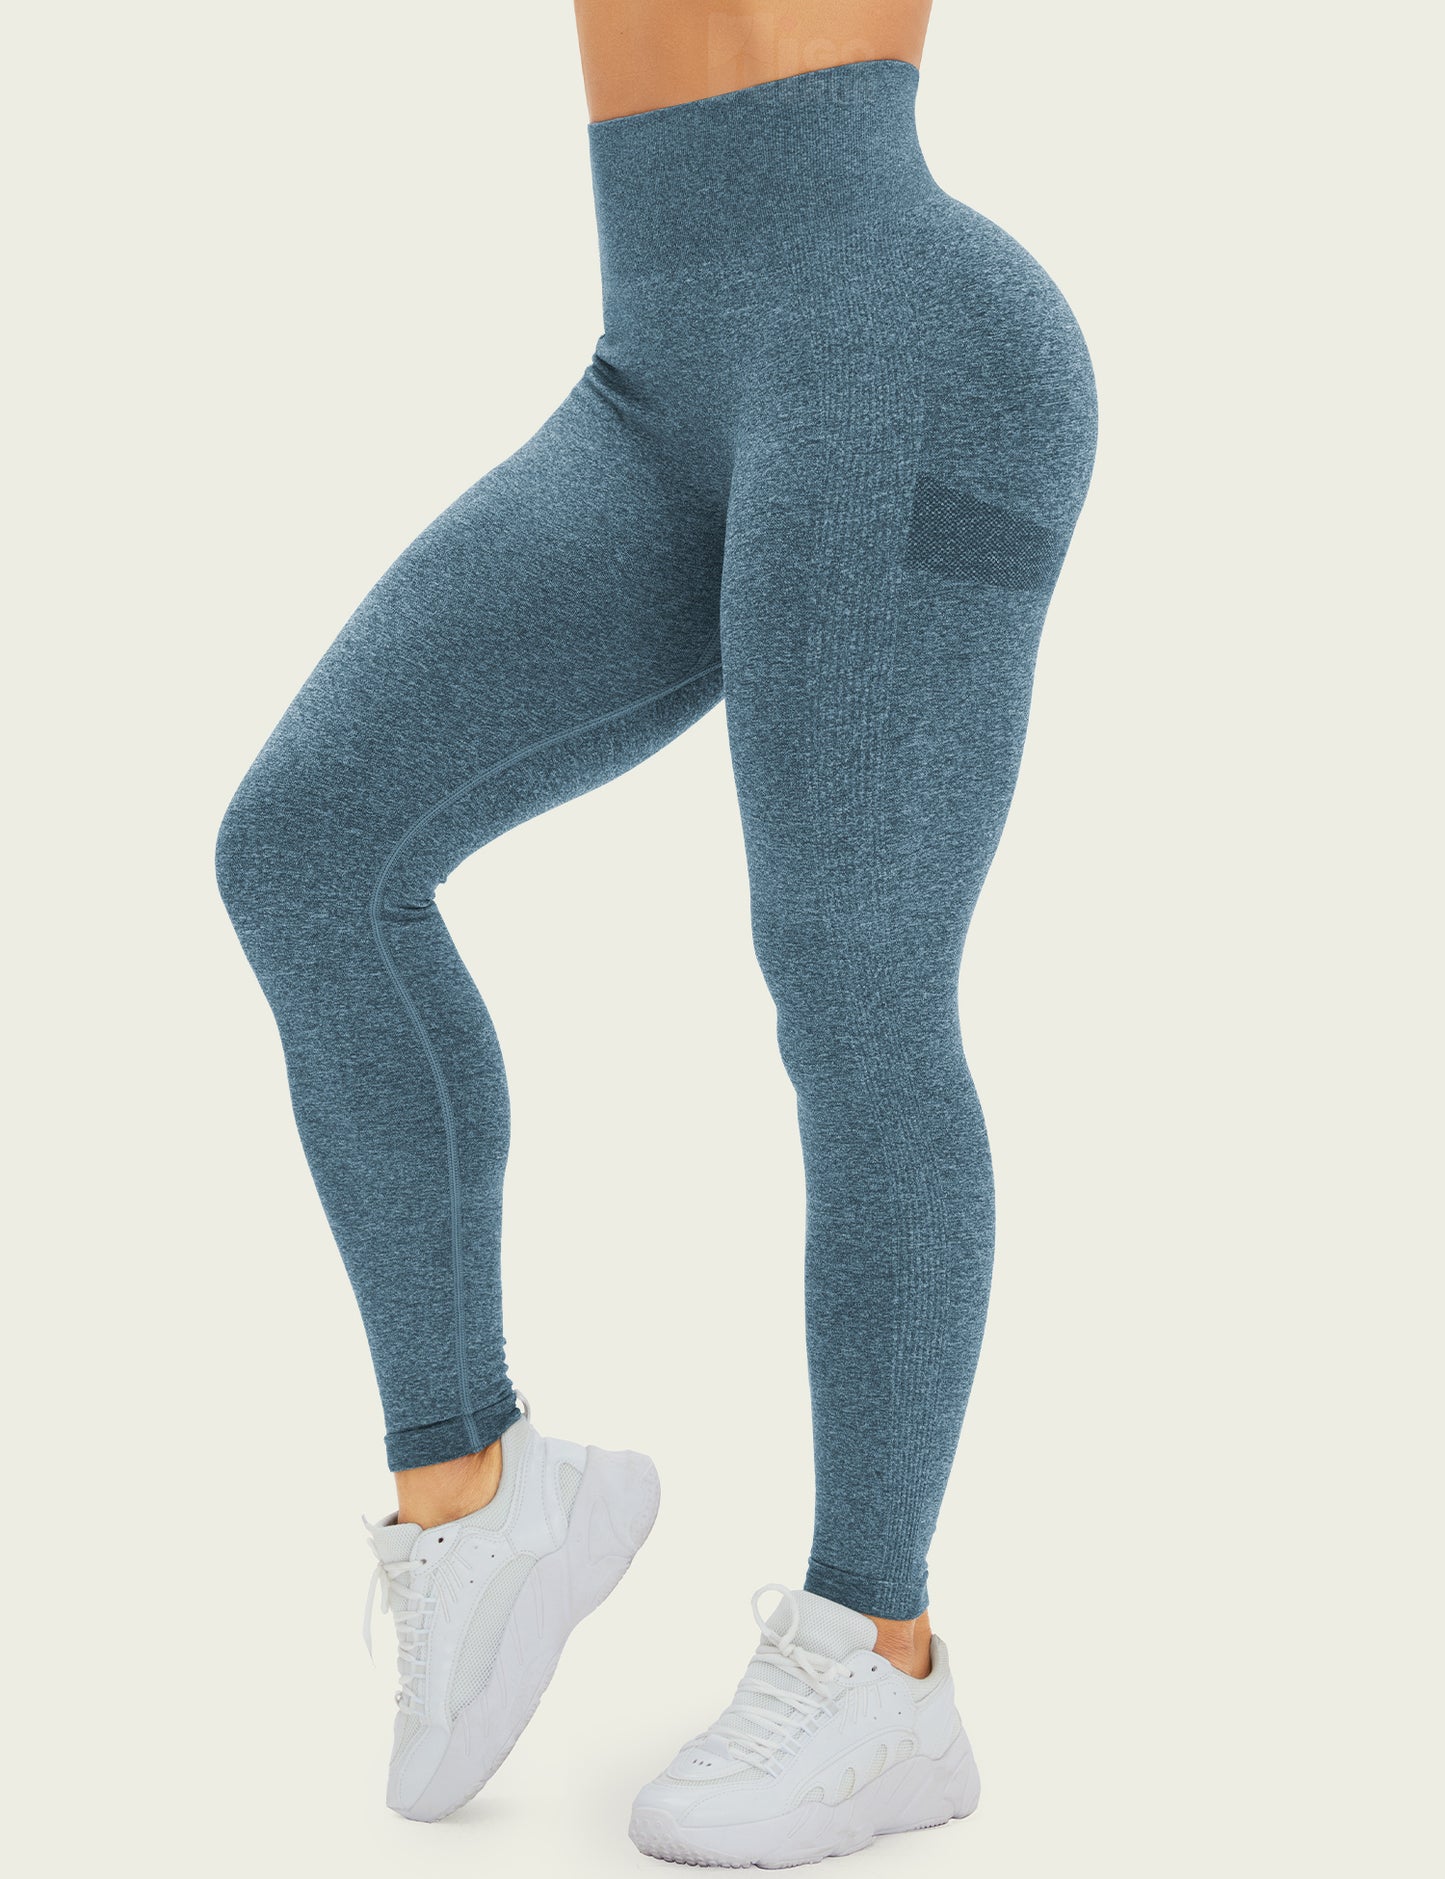 HIGORUN Tie Dye Workout Seamless Leggings for Women High Waist Gym Leggings Yoga Pants Blue